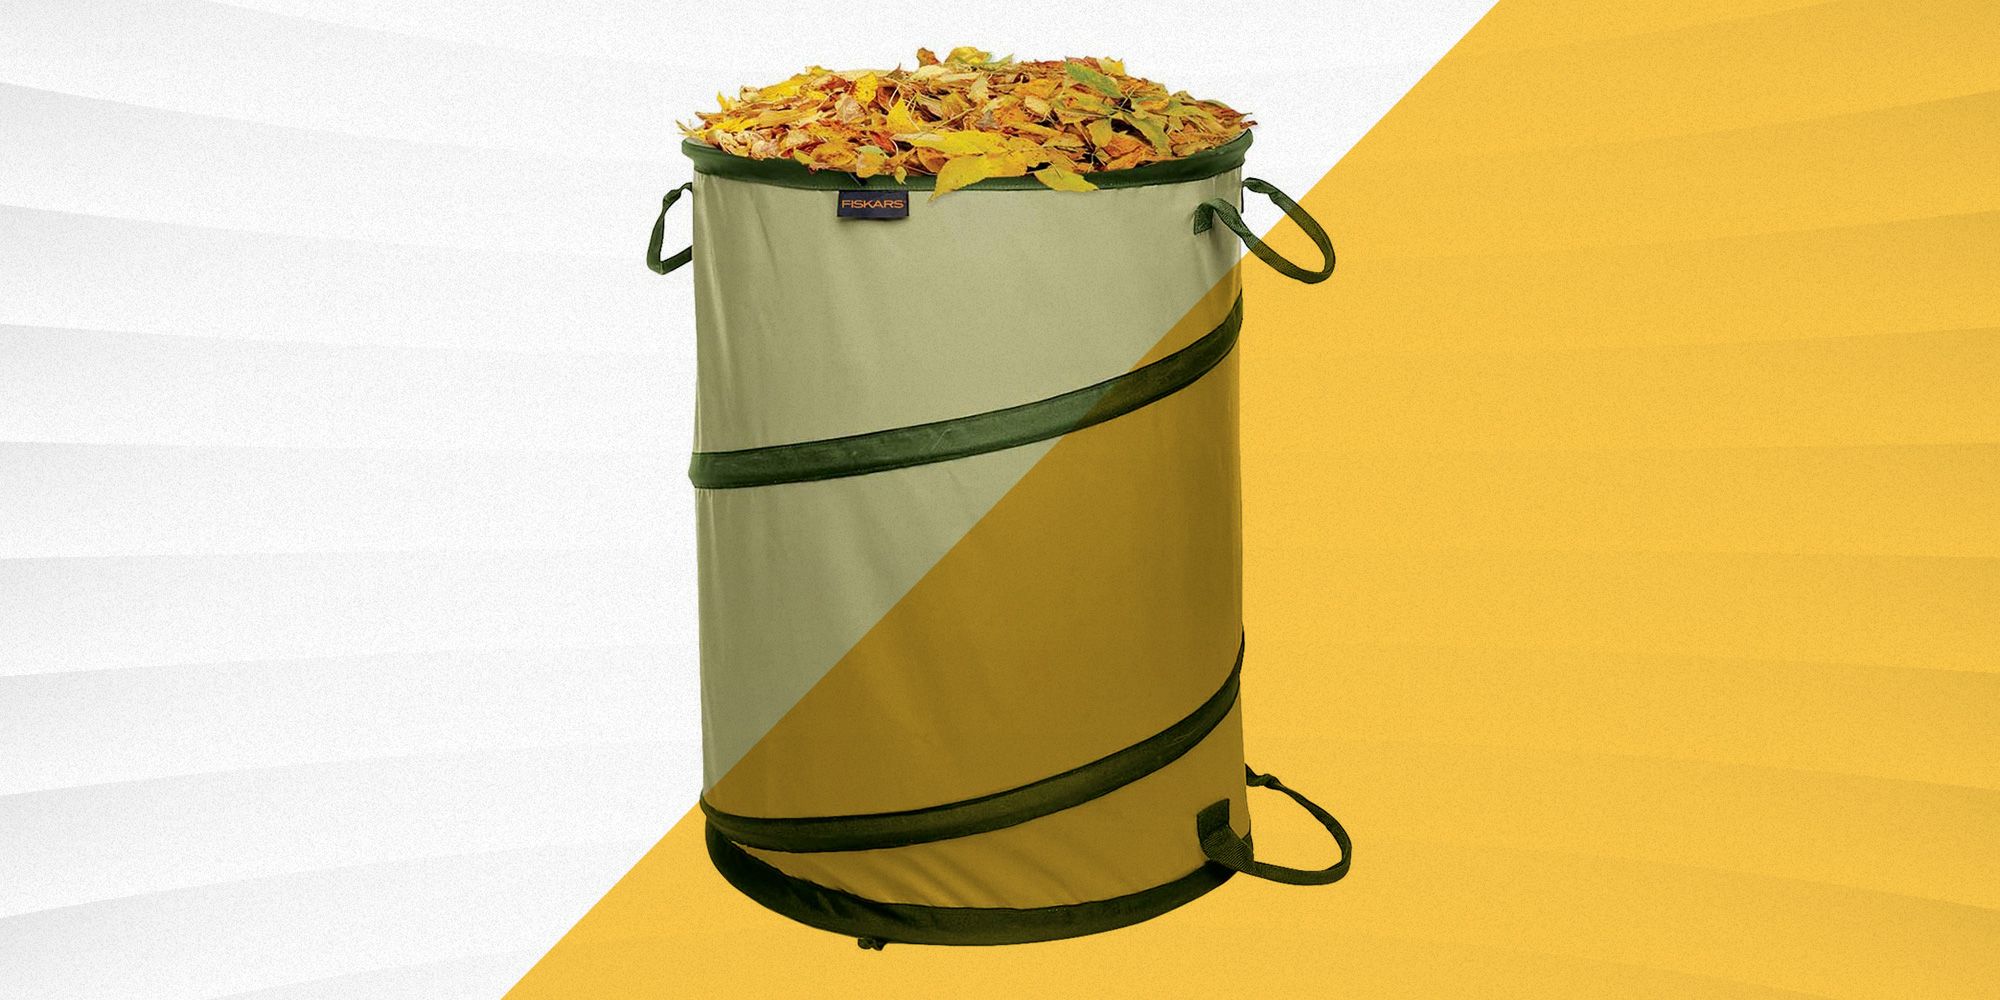 suukua Standard 63 Gallons Garden Yard Bag Reusable Foldable Leaf Trash Bags Lawn Pool Garden Leaf Waste Bag